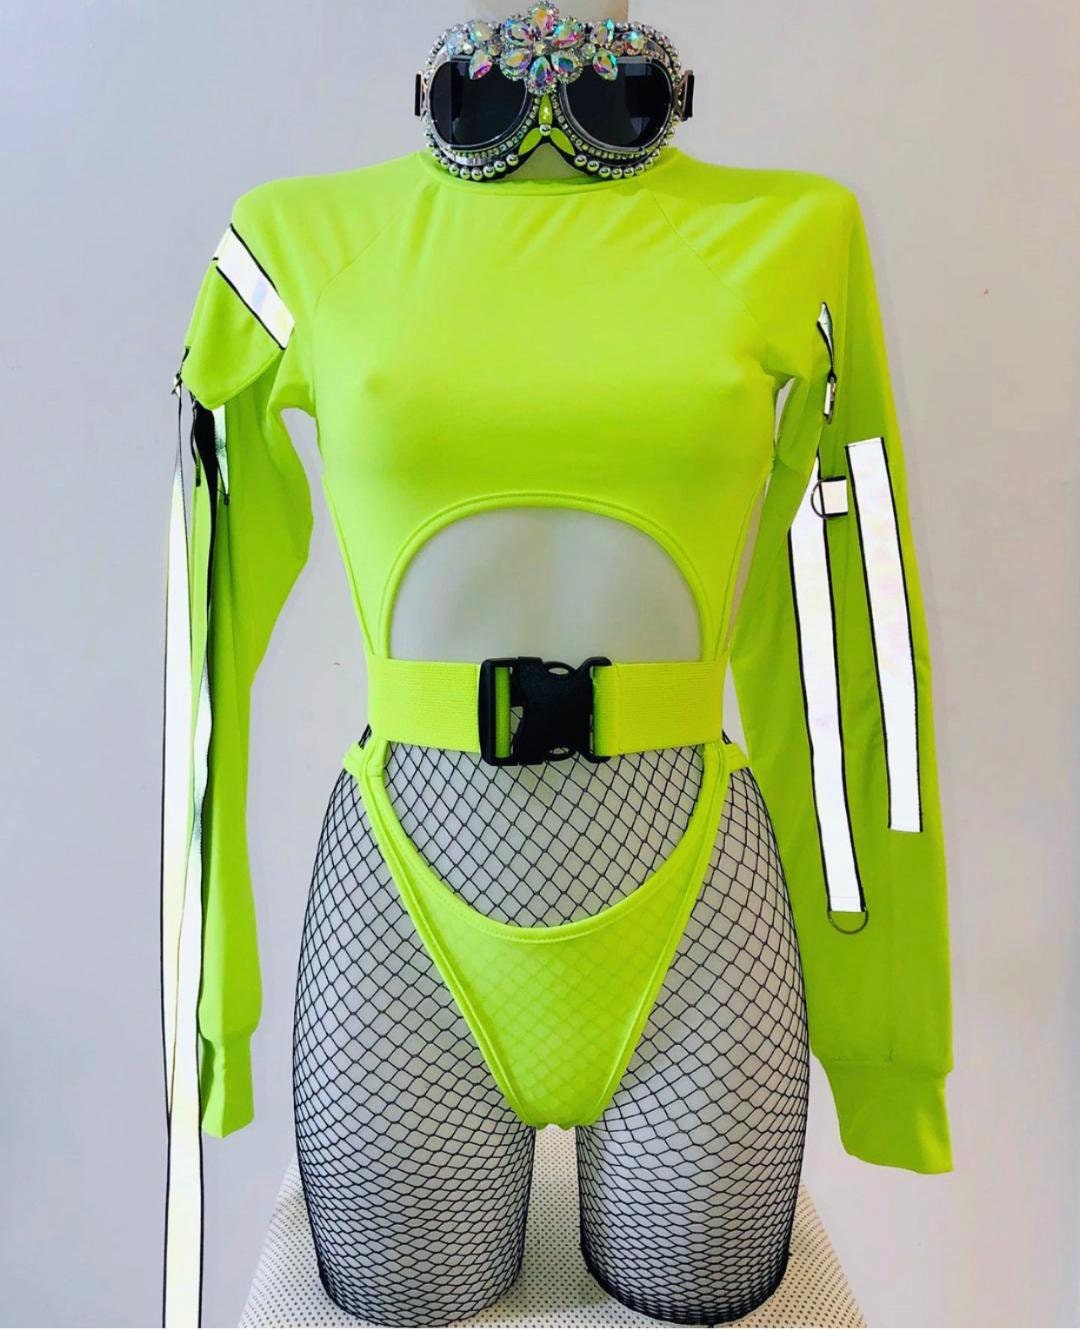 SICODA 10 meters Neon green elastic strap for night club dancing rubber  elastic for garments accessories diy elastic belts